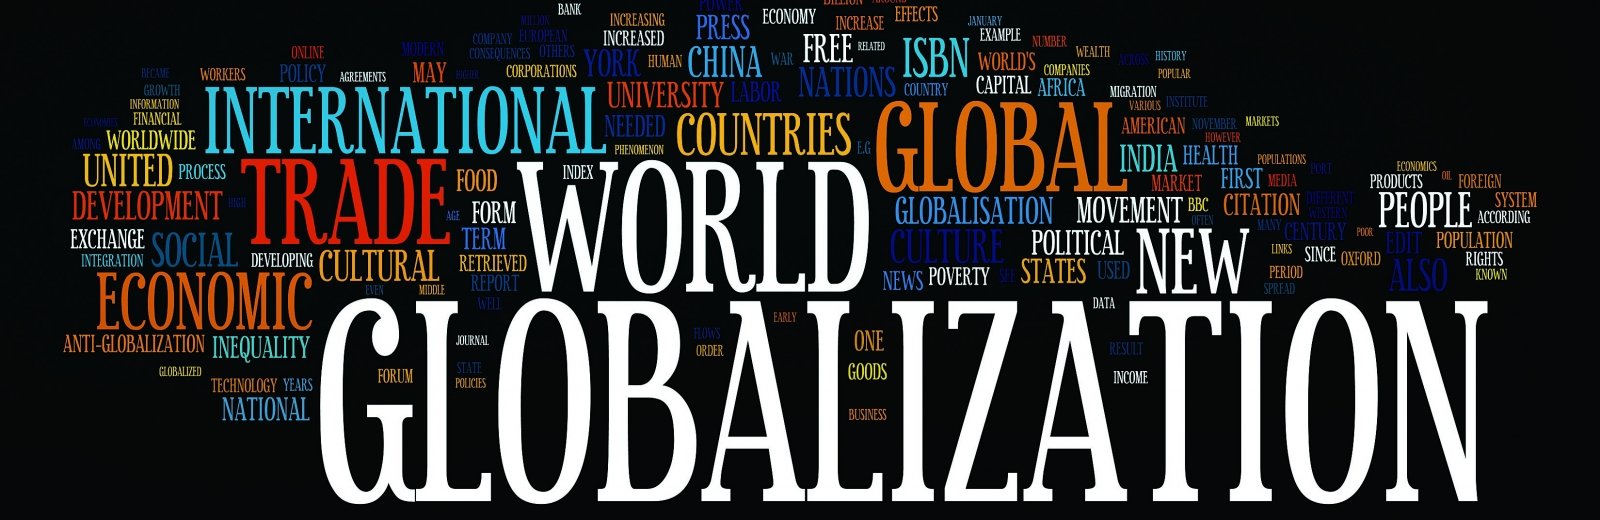 A group of words like "Globalization", "Trade", "International"...